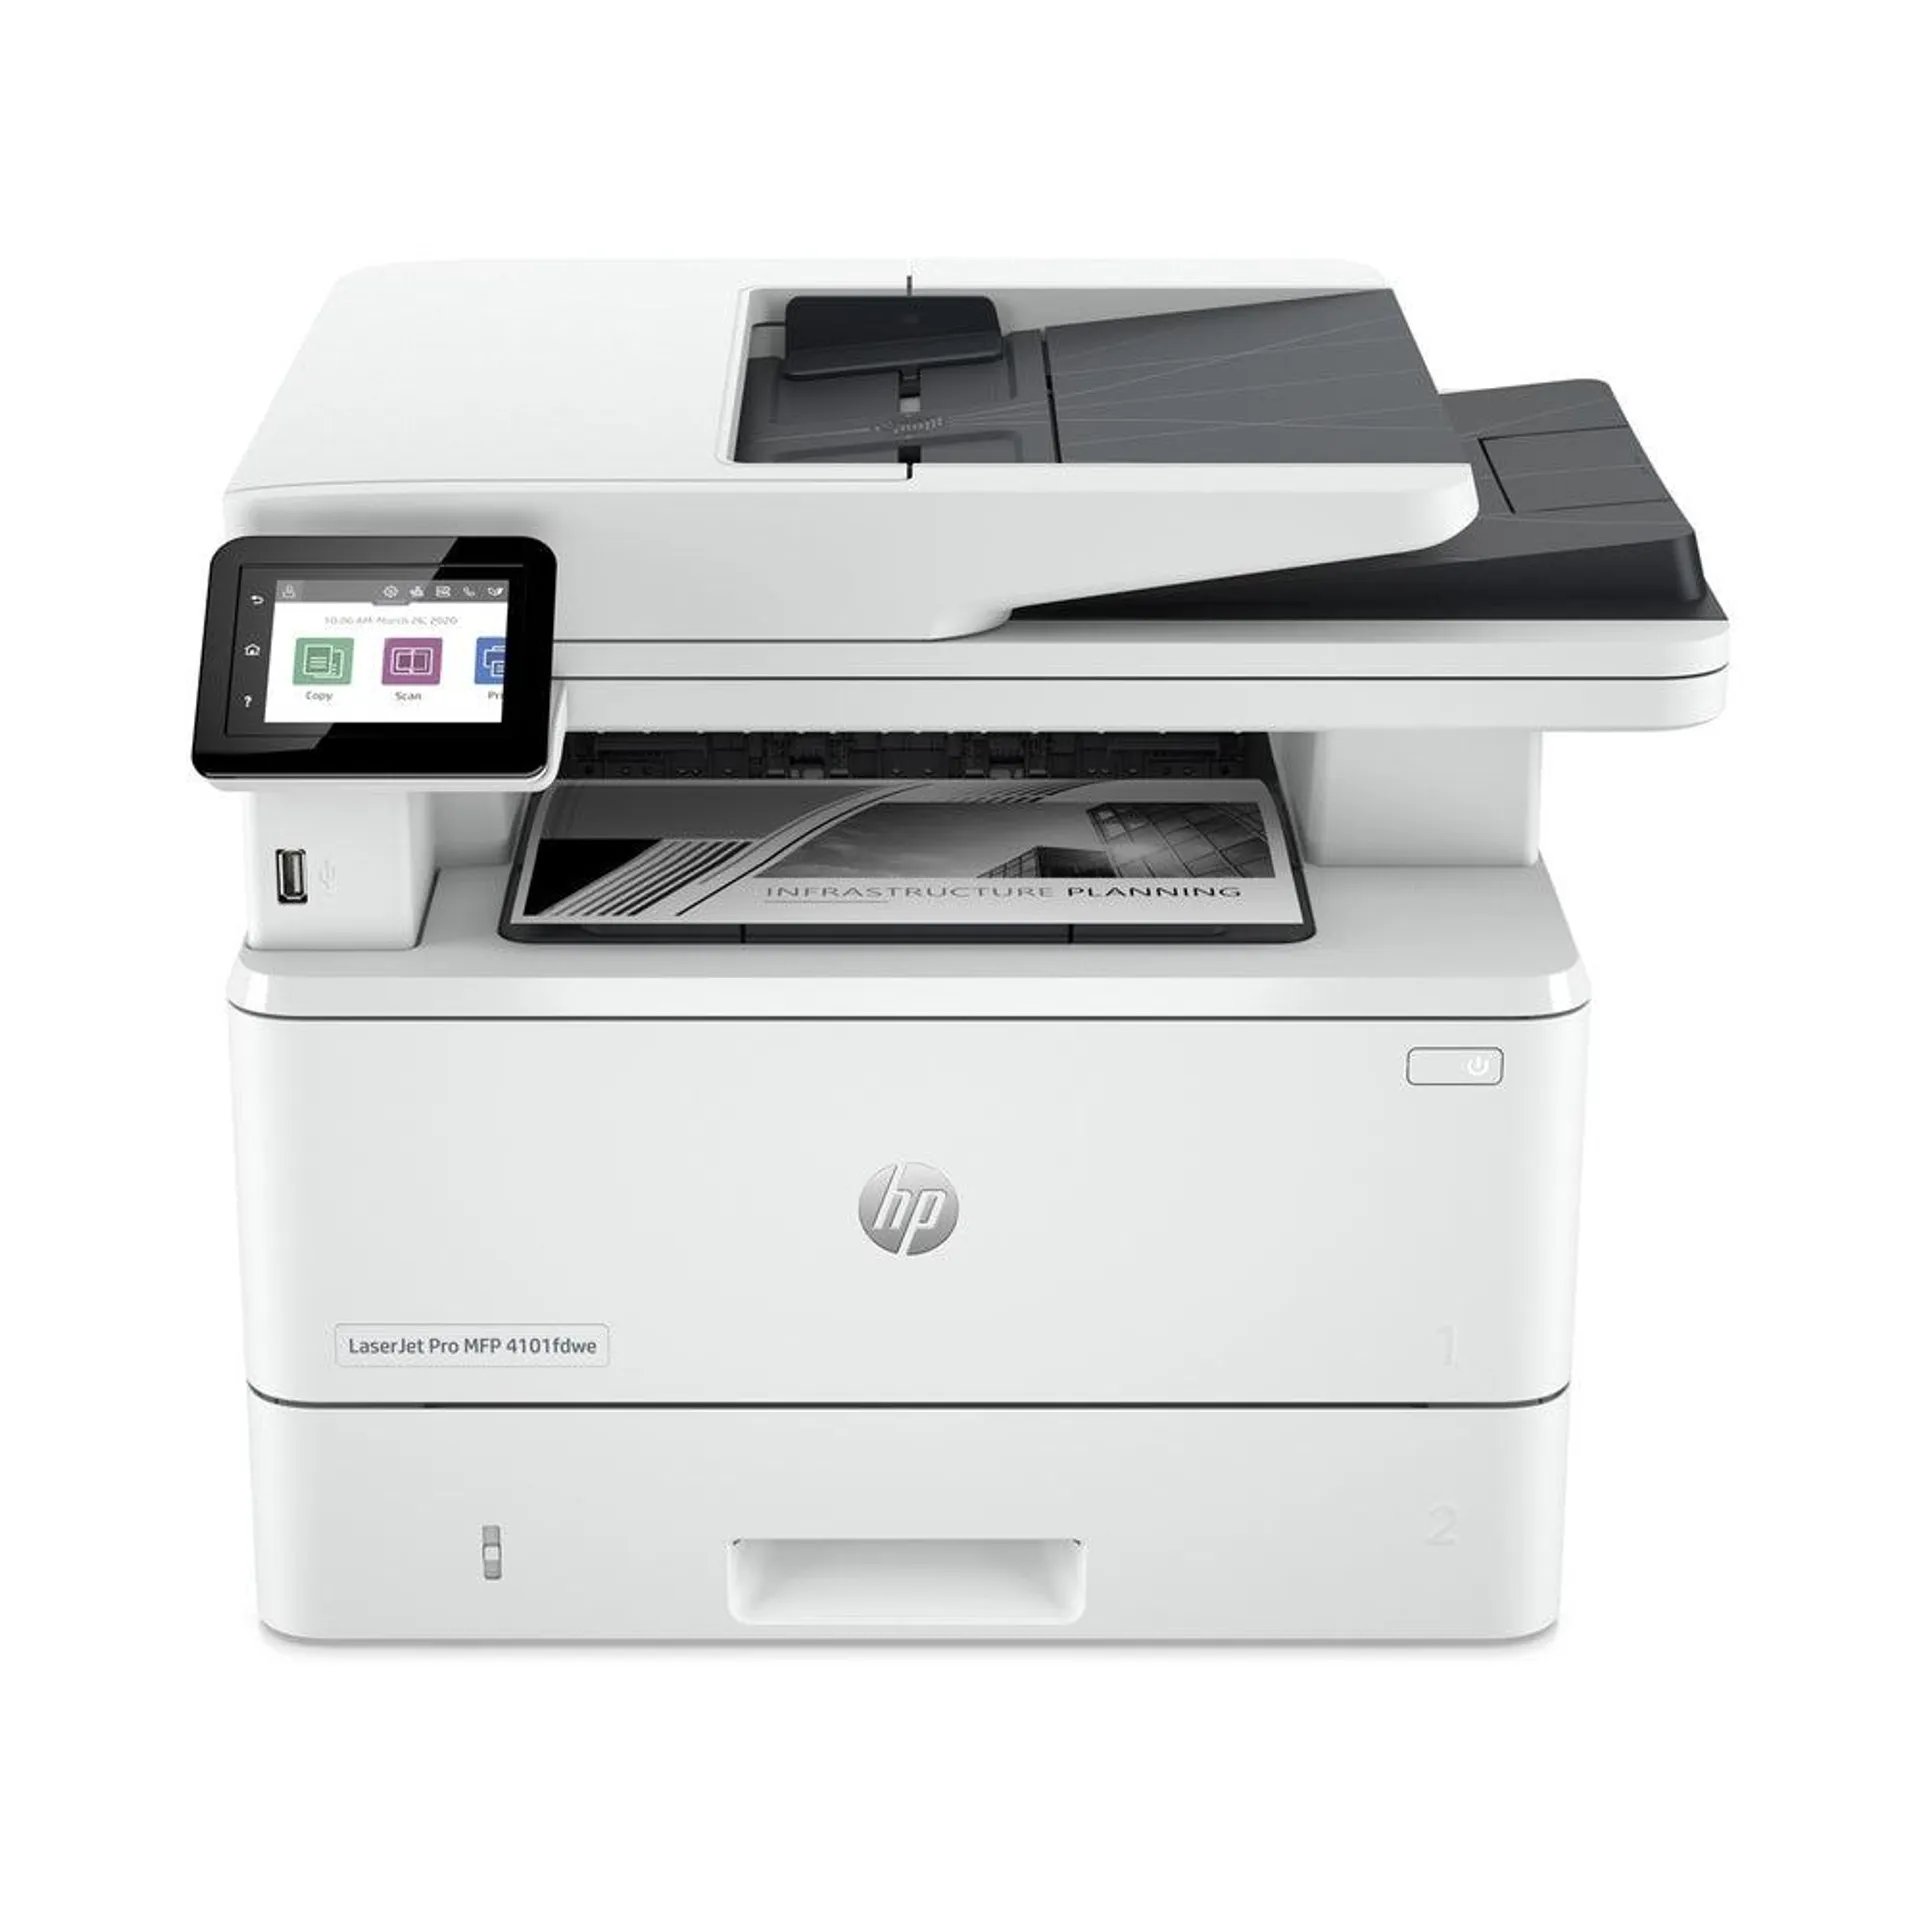 HP LaserJet Pro MFP 4101dwe Wireless Printer with HP+ - White/Black